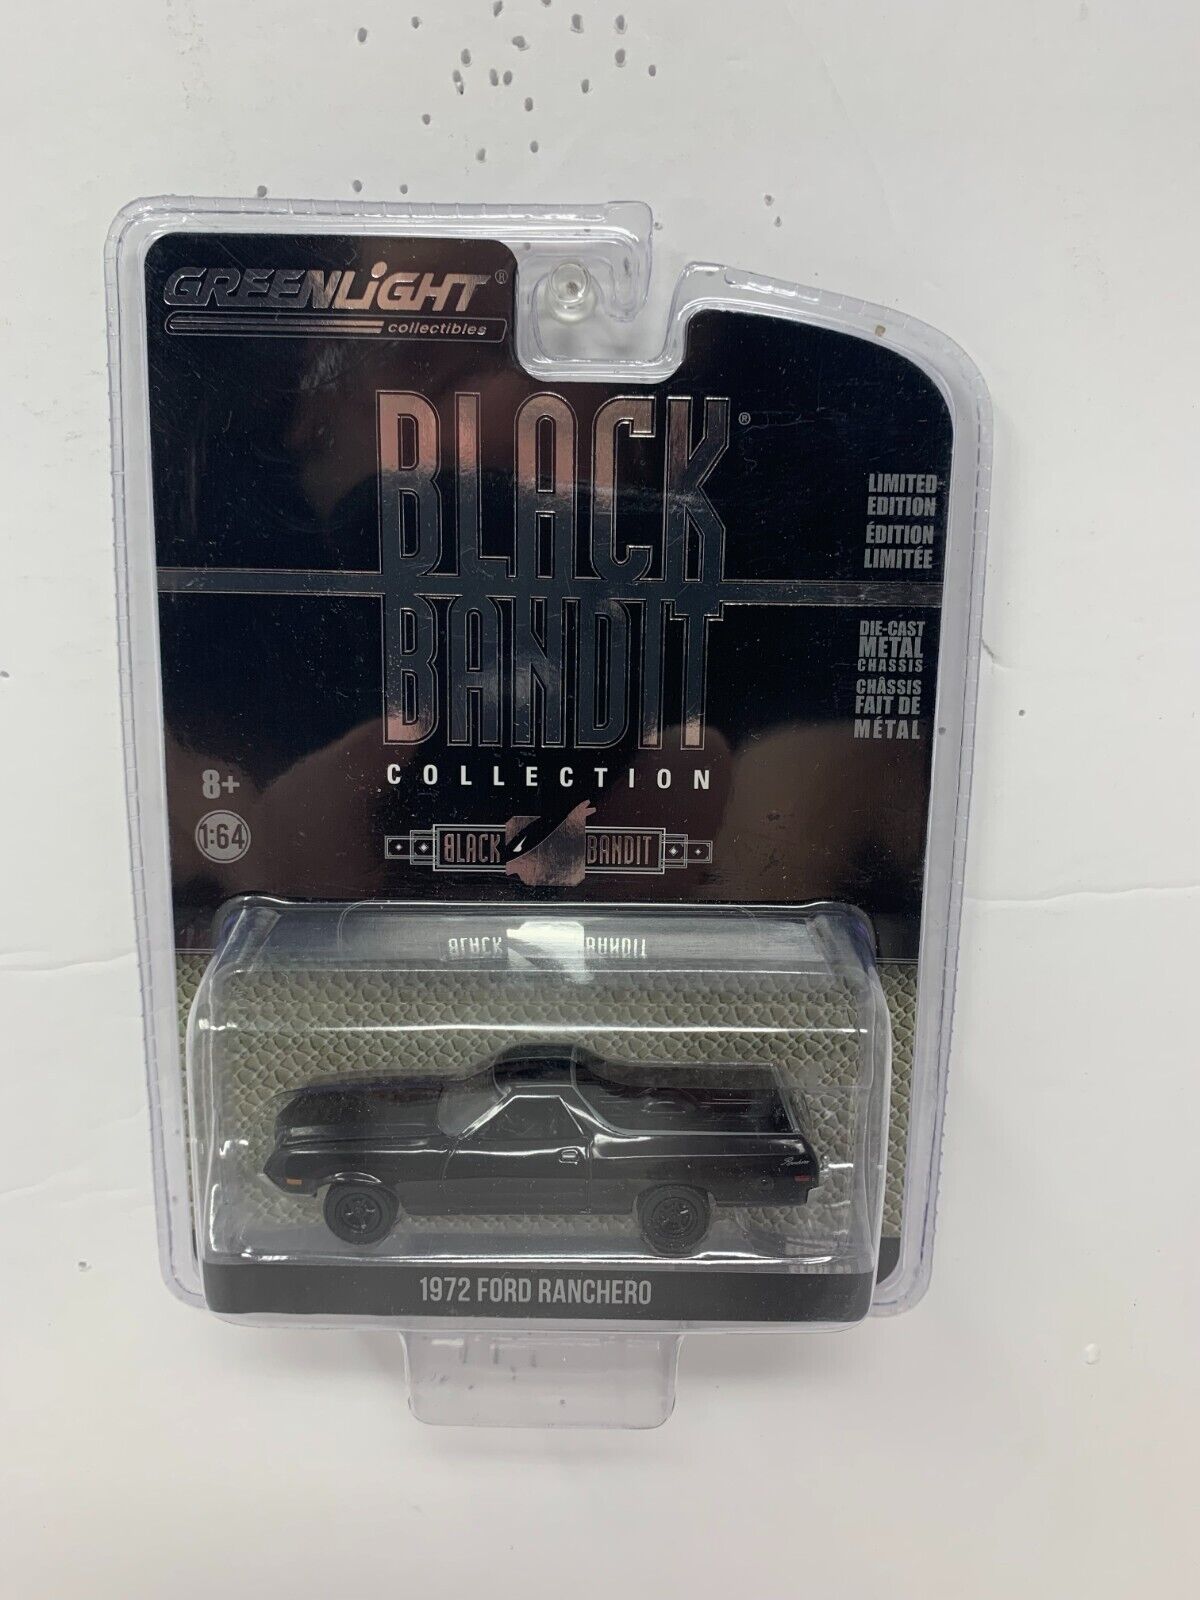 Greenlight Black Bandit Collection 1972 Ford Ranchero 1:64 Diecast